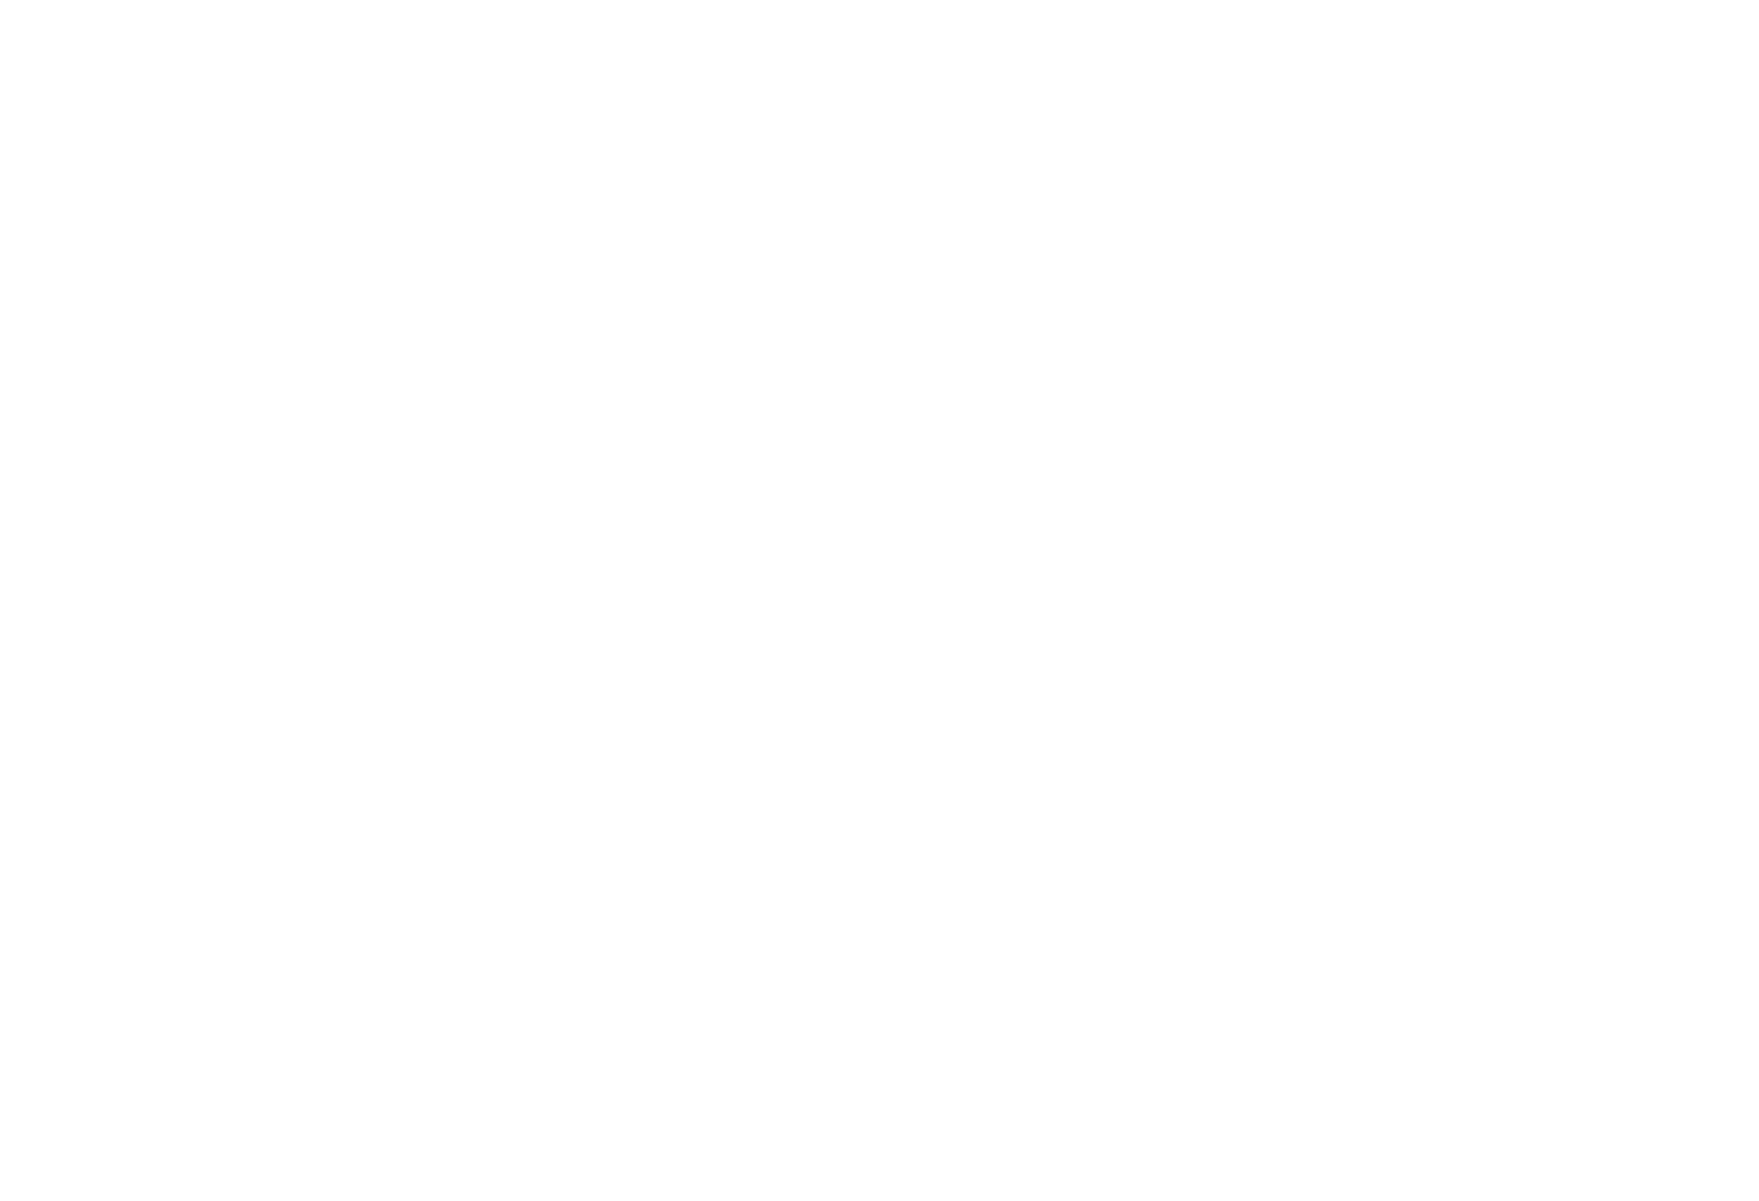 GPCE Brisbane